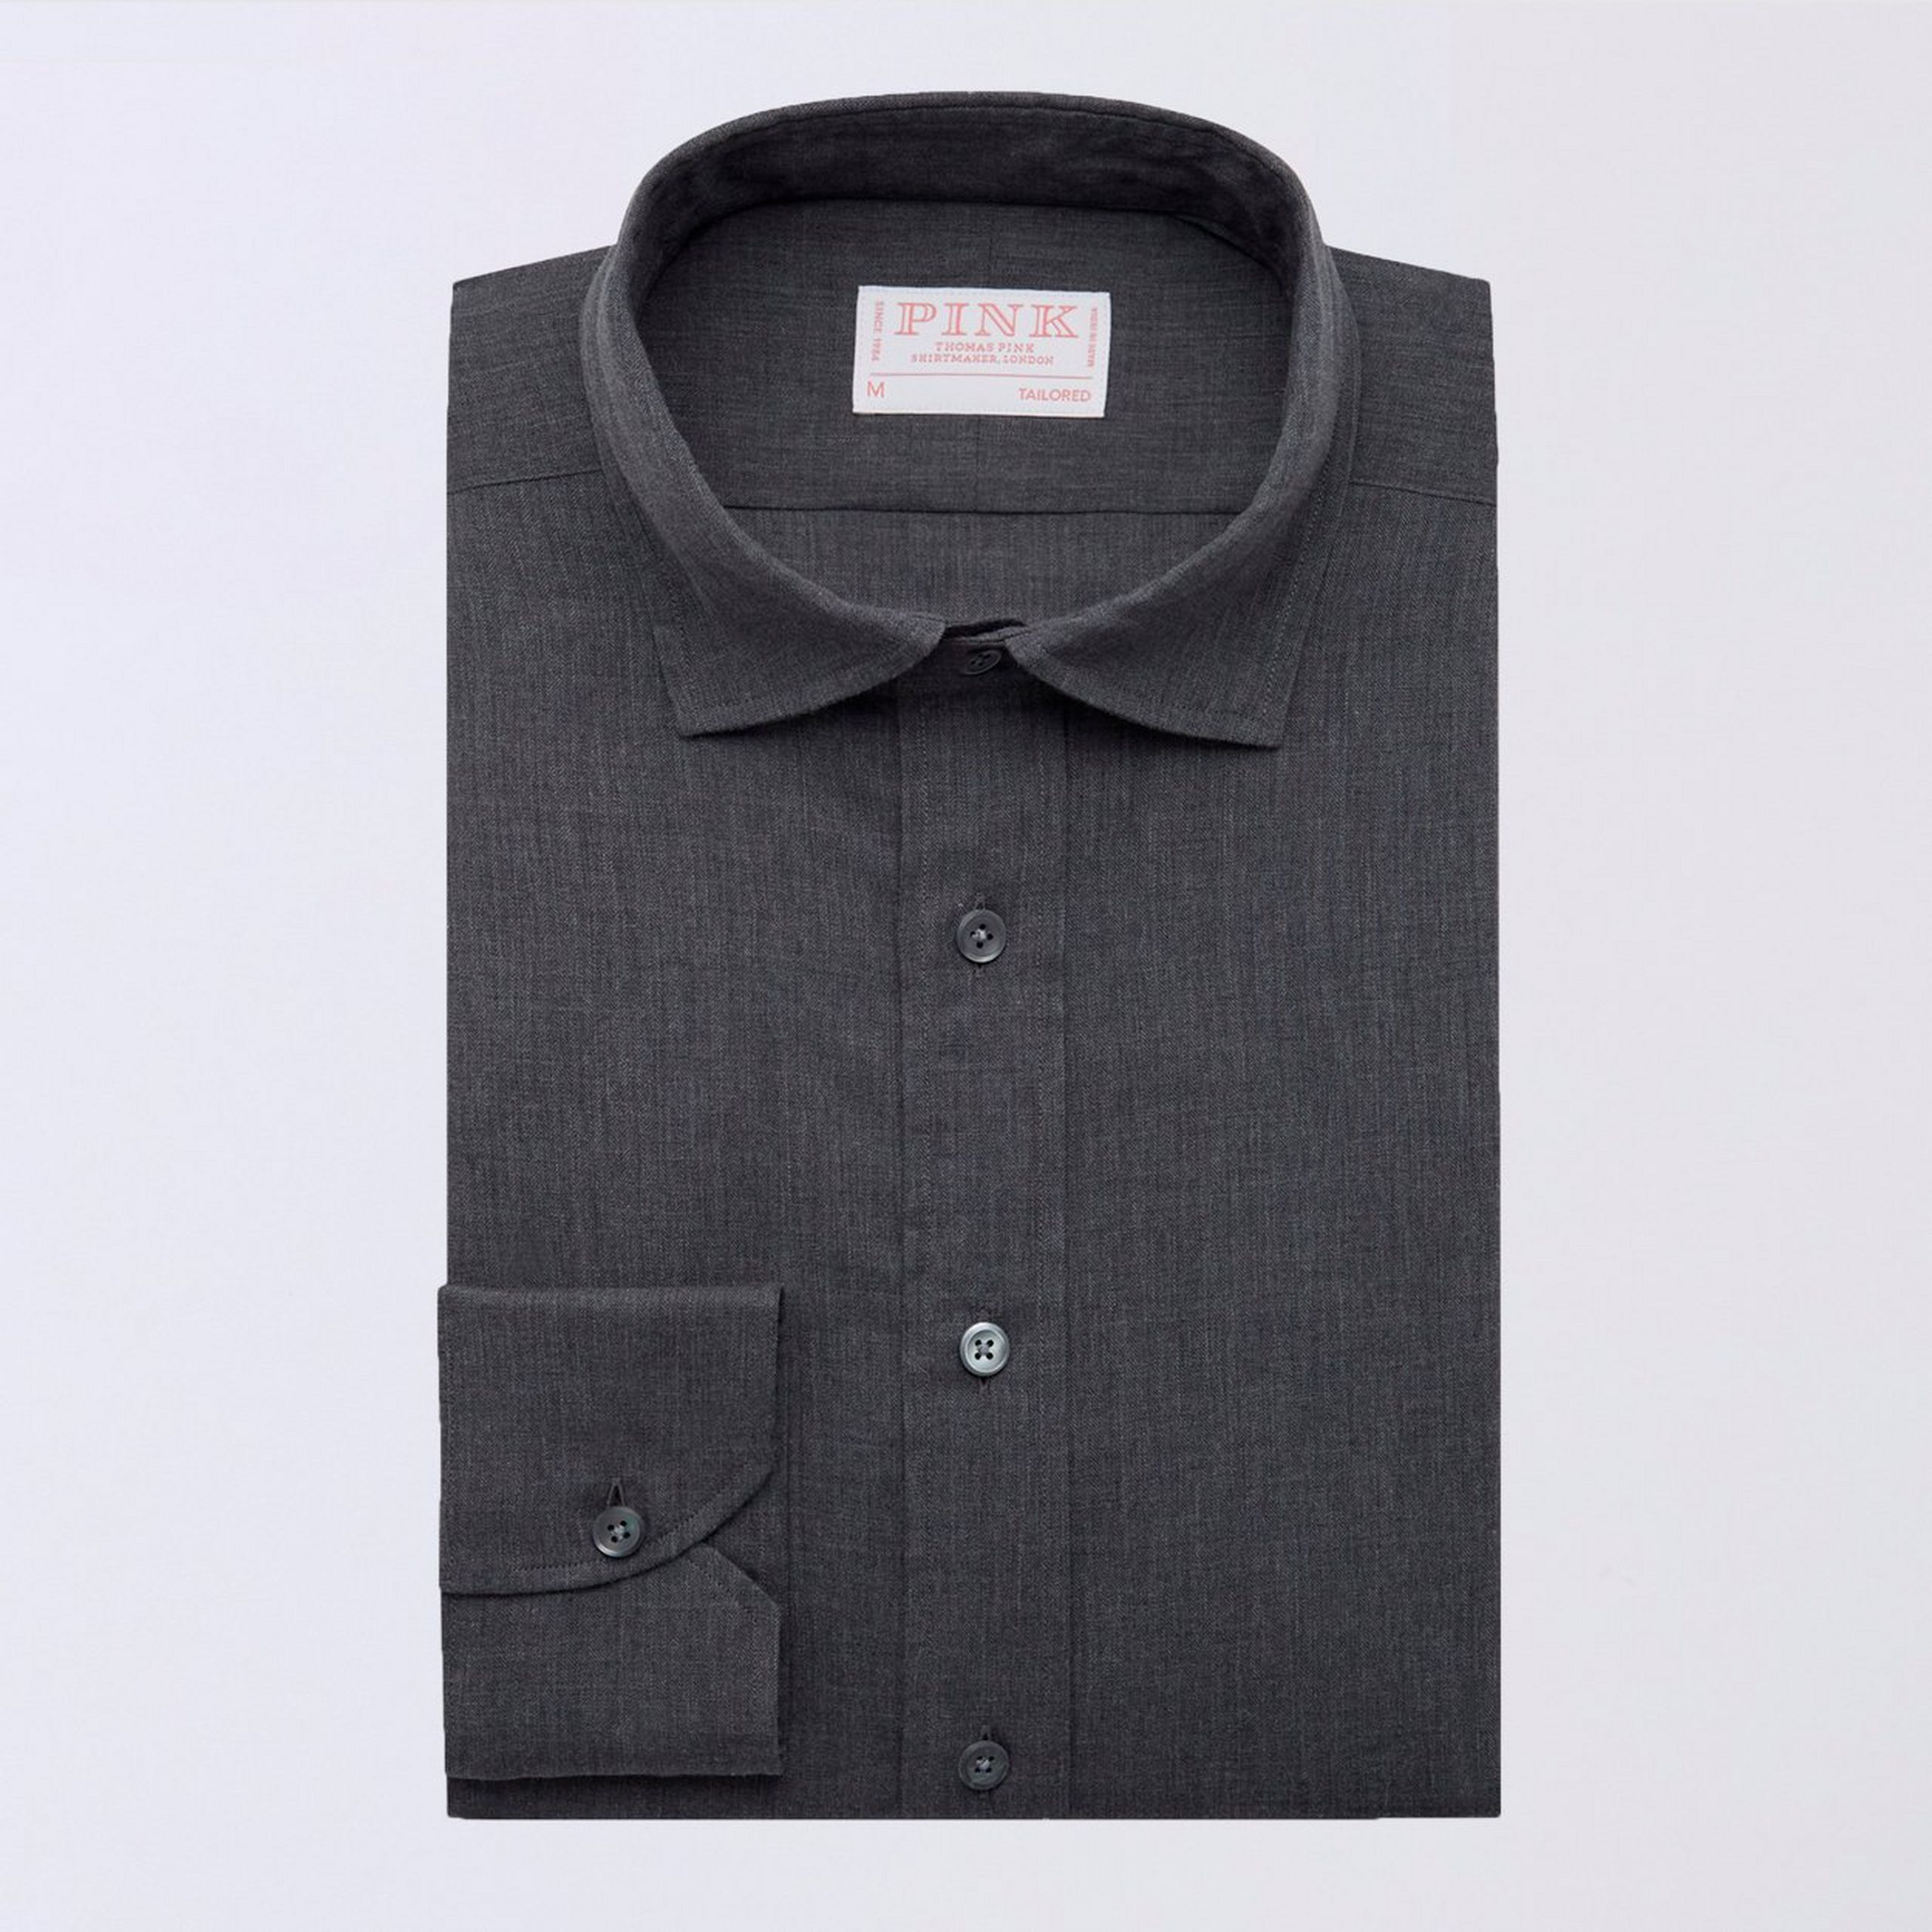 Charcoal Grey Tailored Smart Casual Brushed Herringbone Shirt